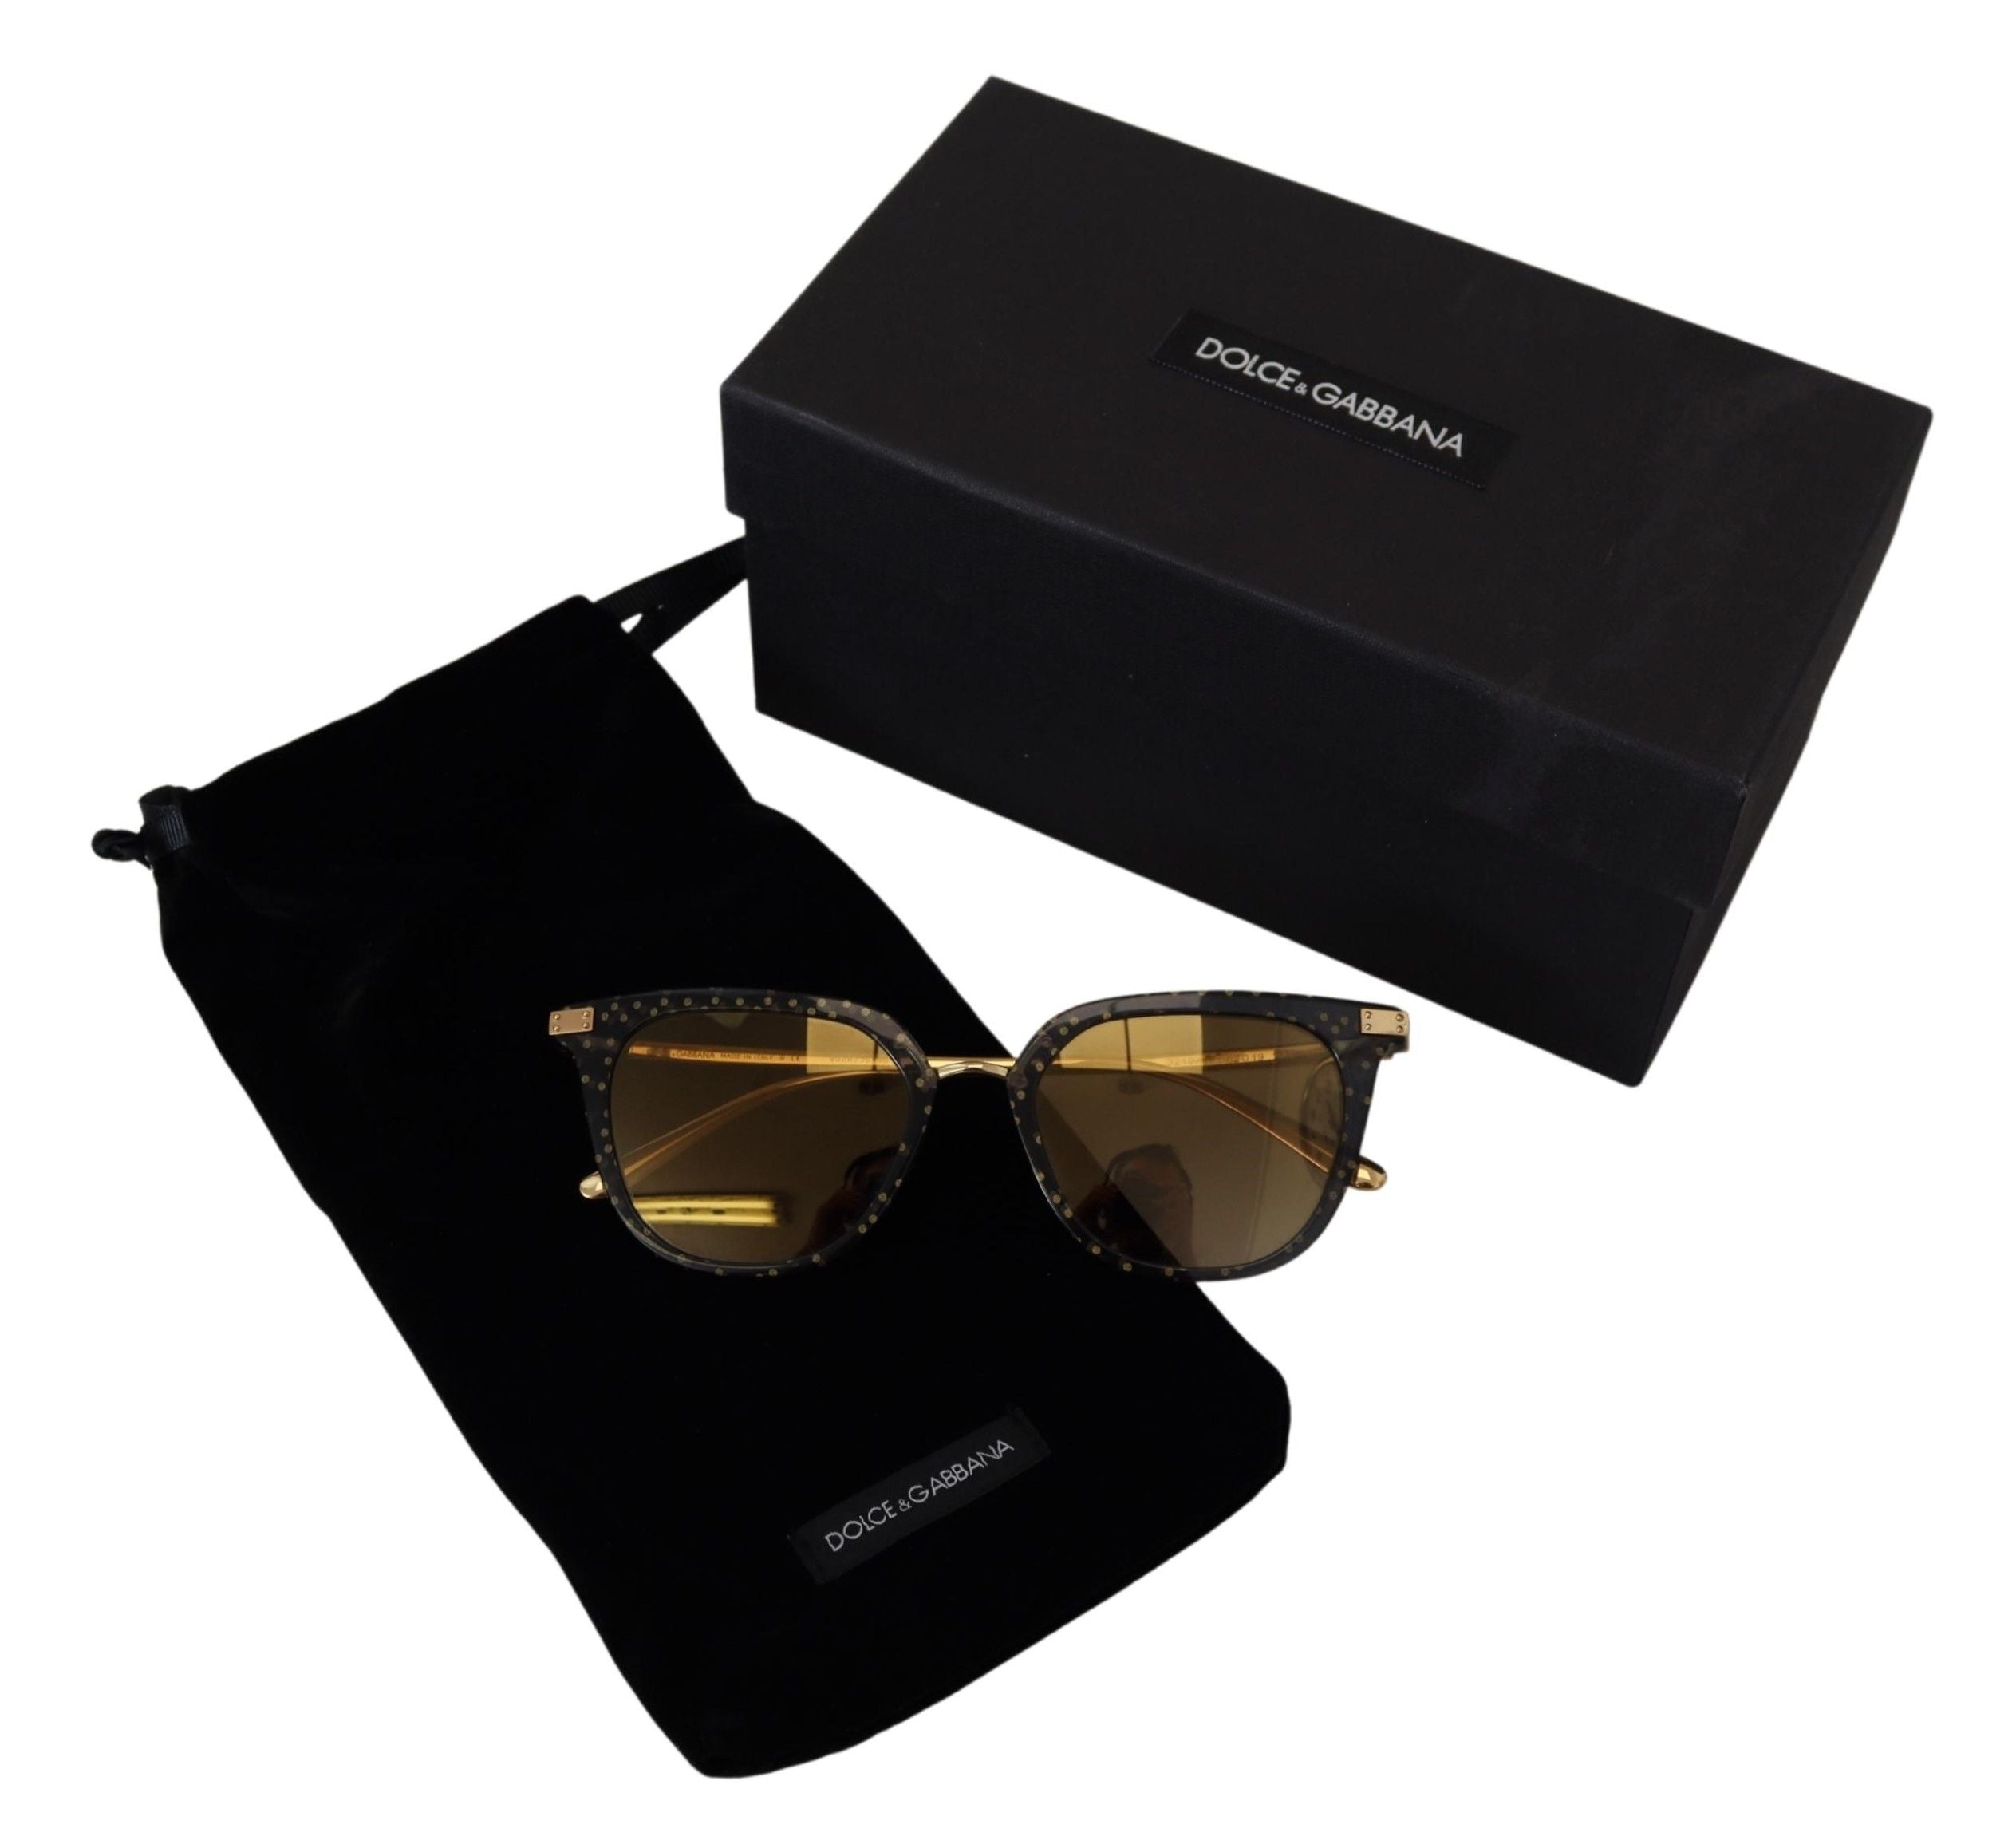 Dolce & Gabbana Chic Irregular-Shaped Designer Sunglasses